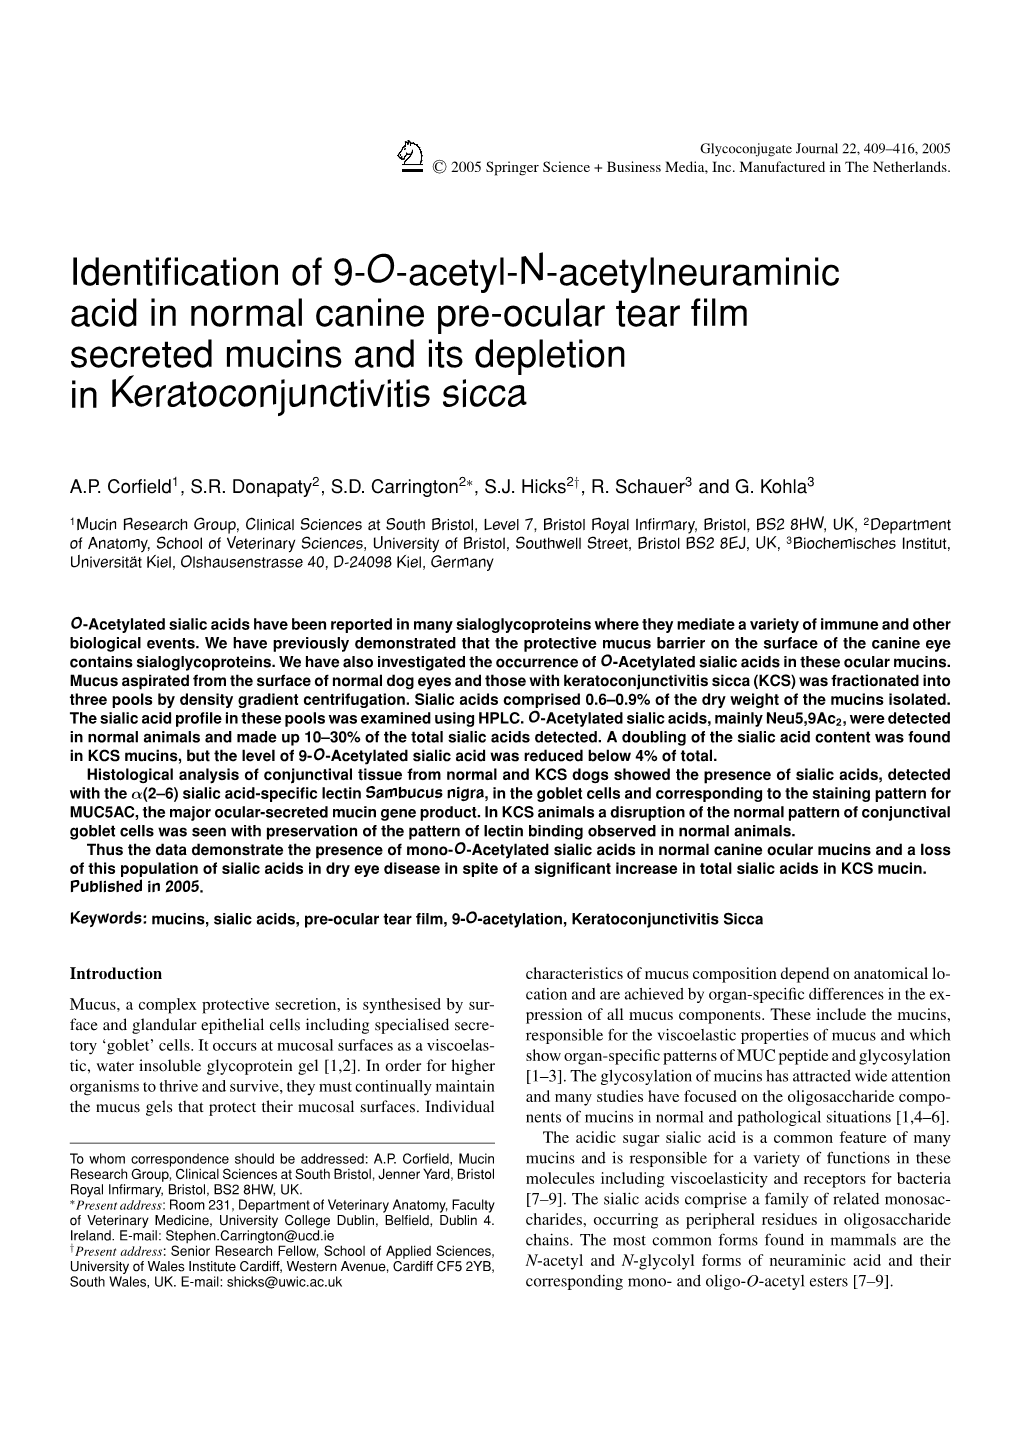 Identification of 9-O-Acetyl-N-Acetylneuraminic Acid